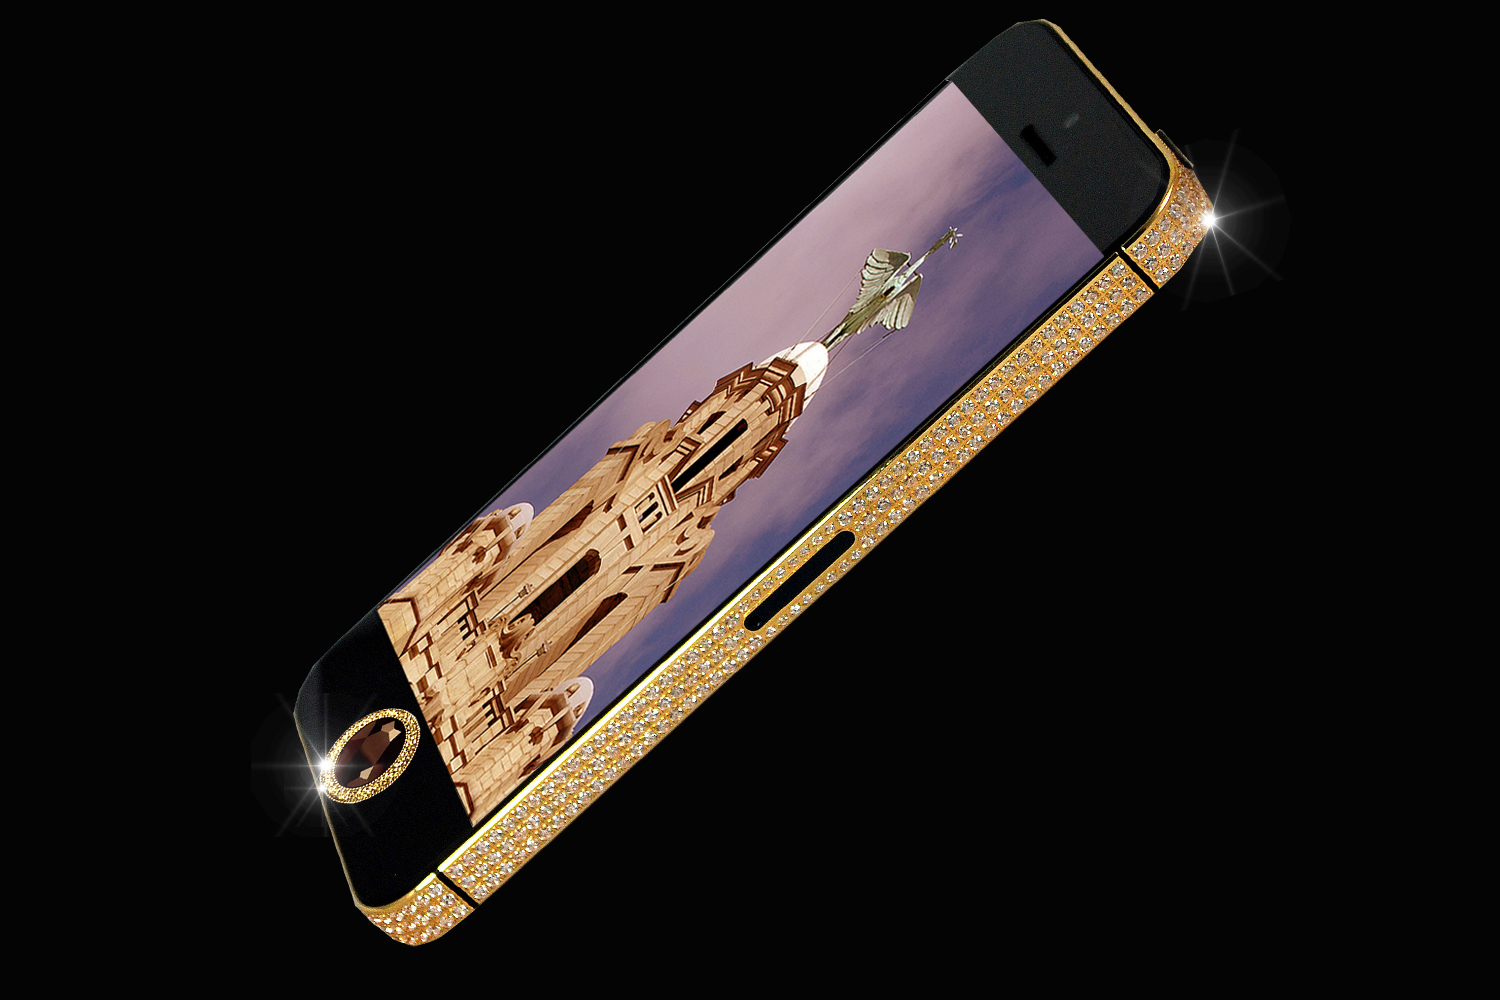 iPhone 5 Black Diamond 